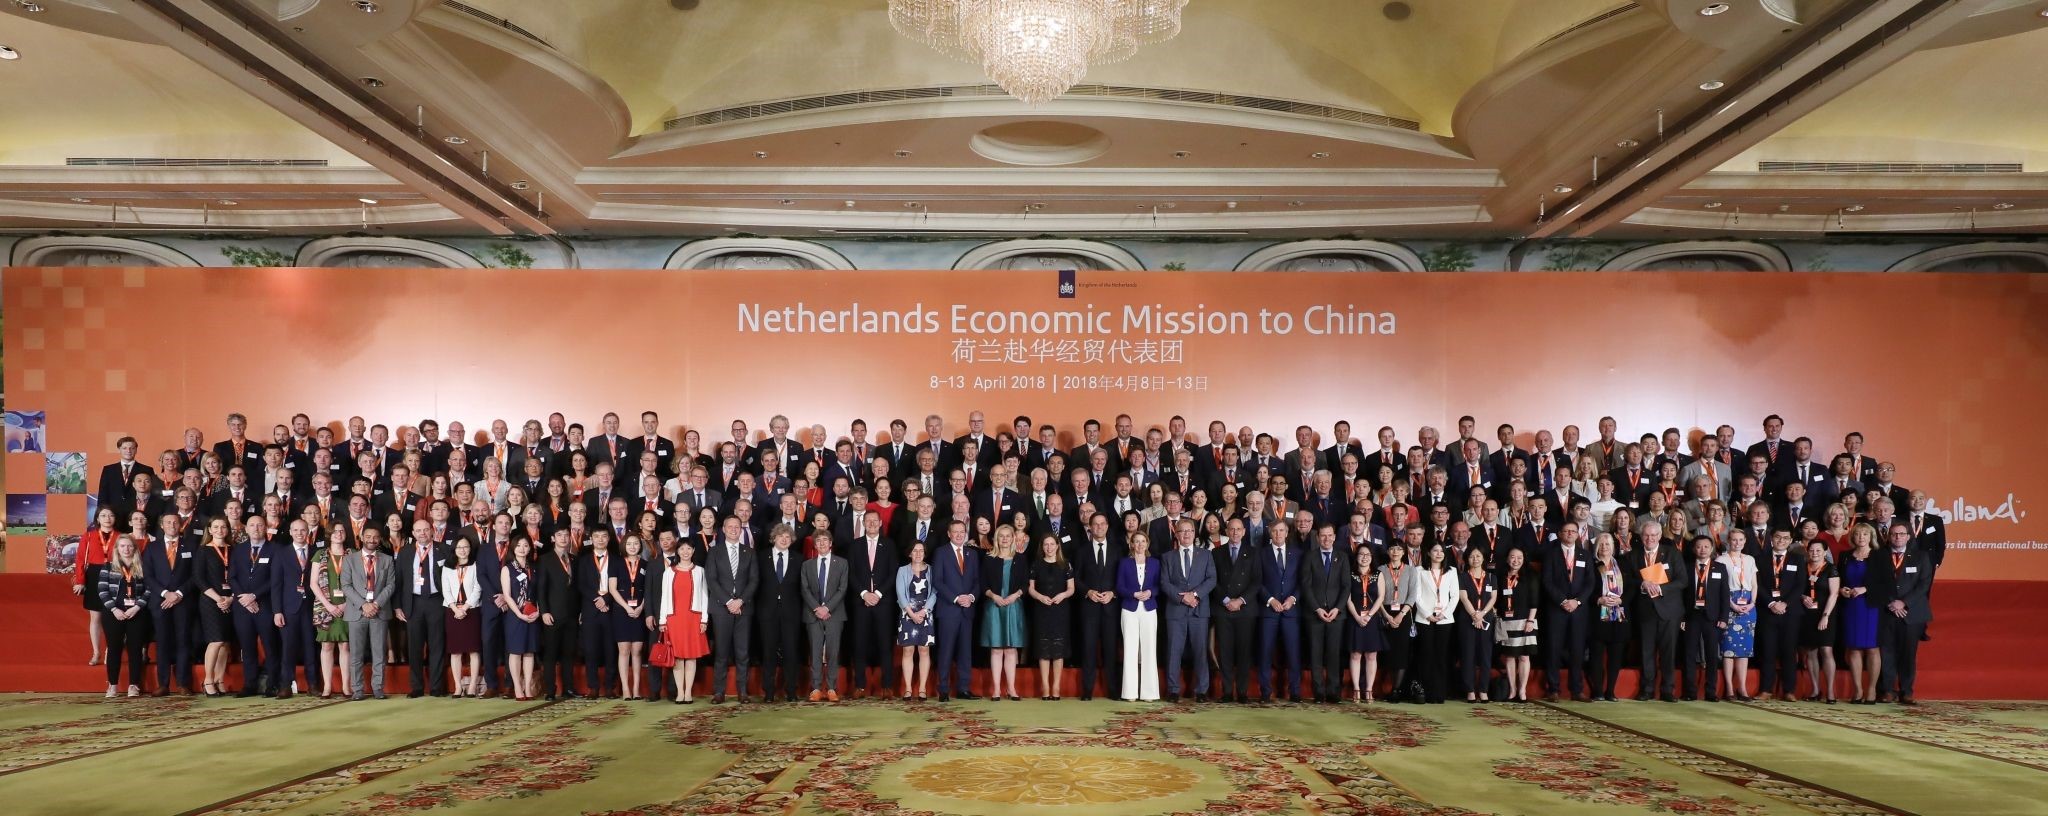 Successful economic trade mission to China 5